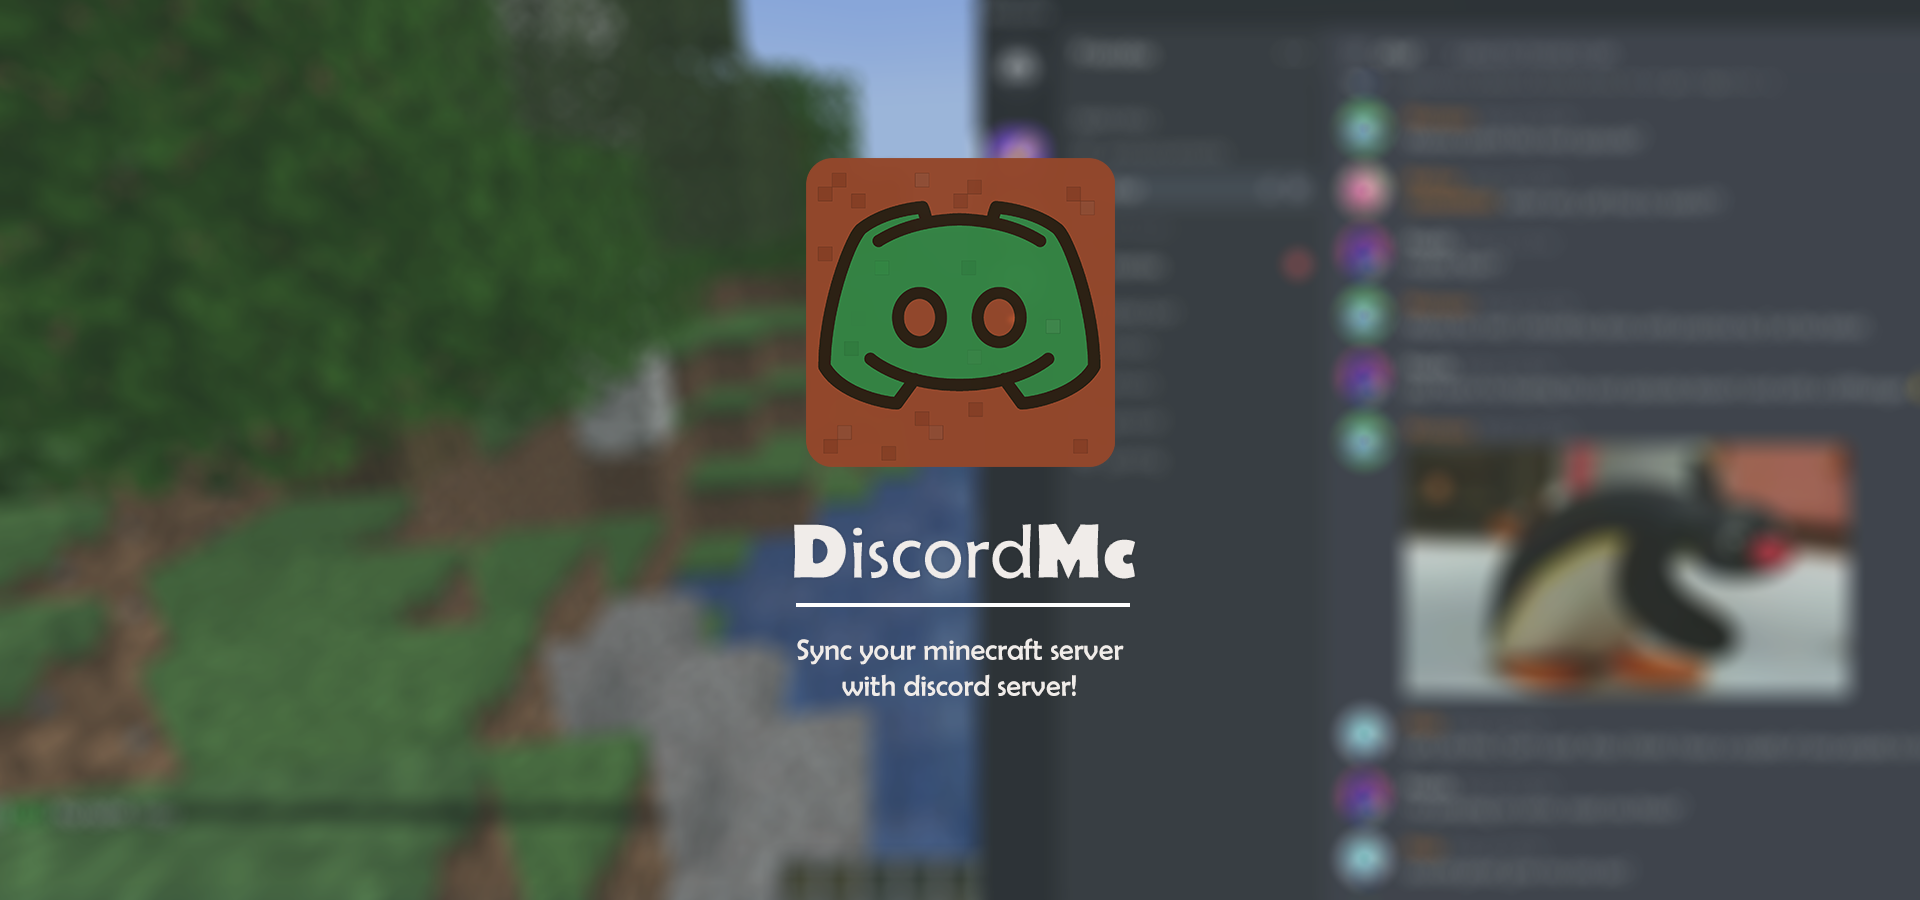 Minecraft Discord (@MinecraftDscord) / X